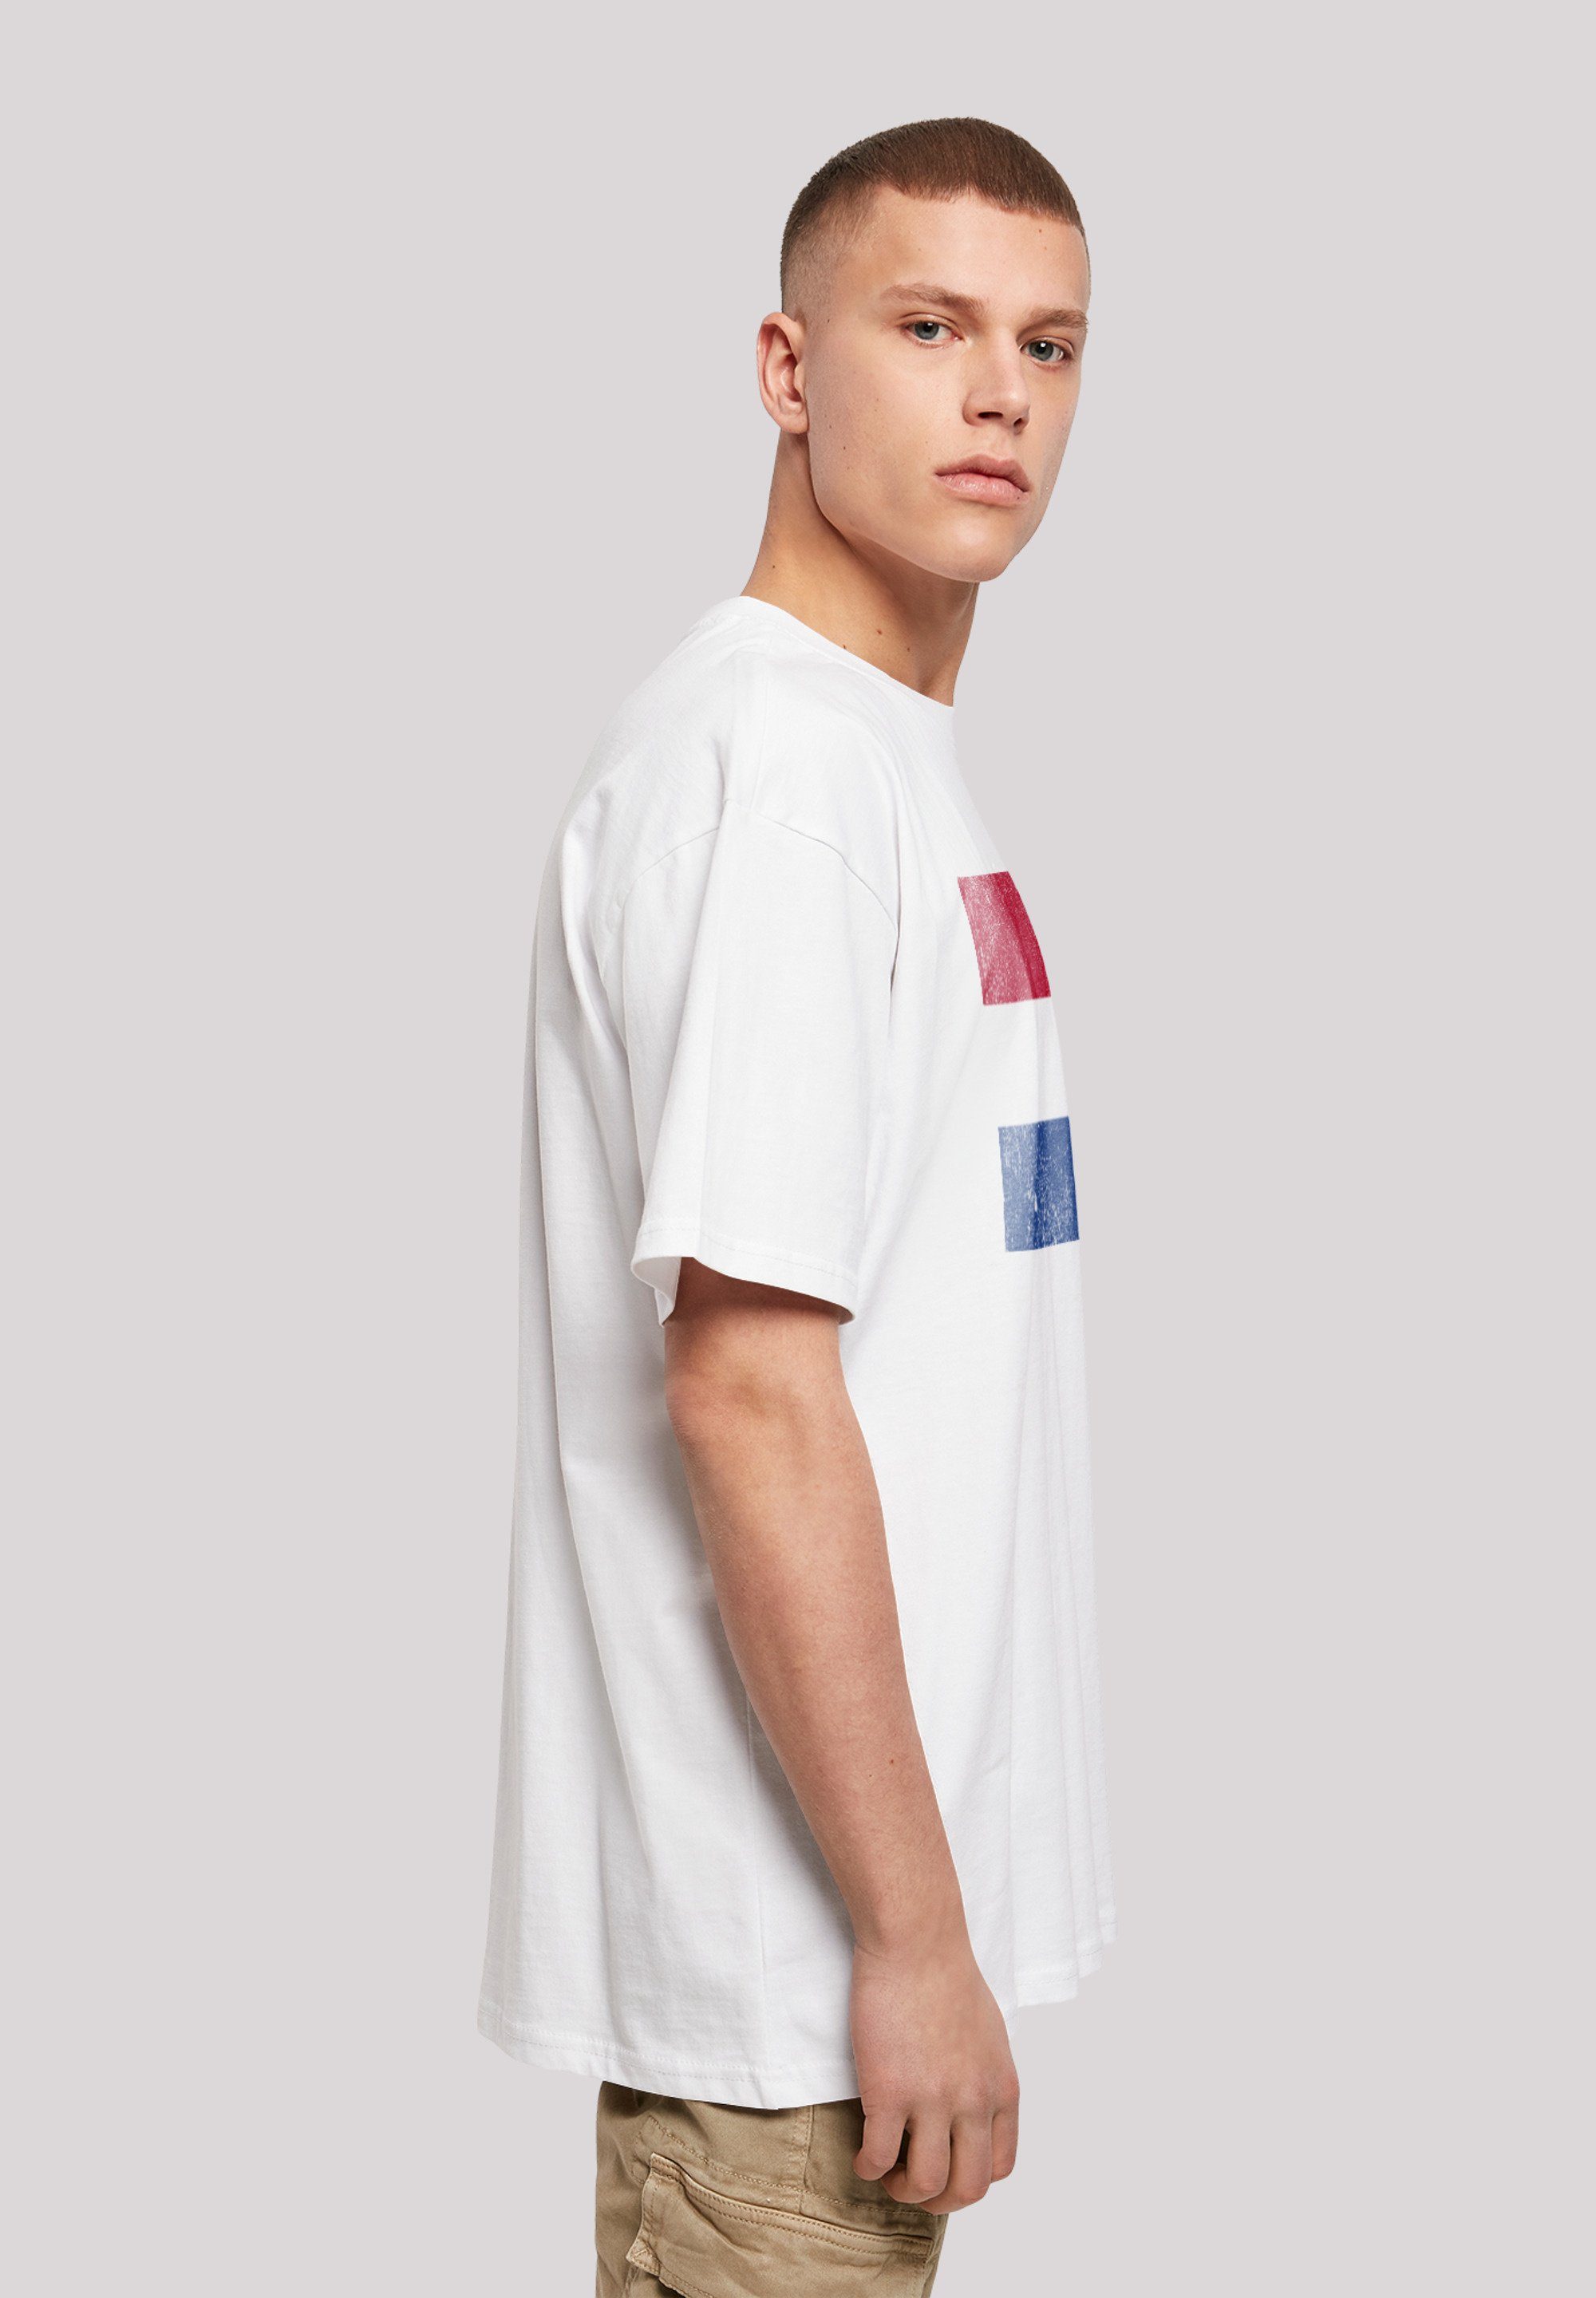 F4NT4STIC T-Shirt Netherlands Holland NIederlande distressed Print Flagge weiß